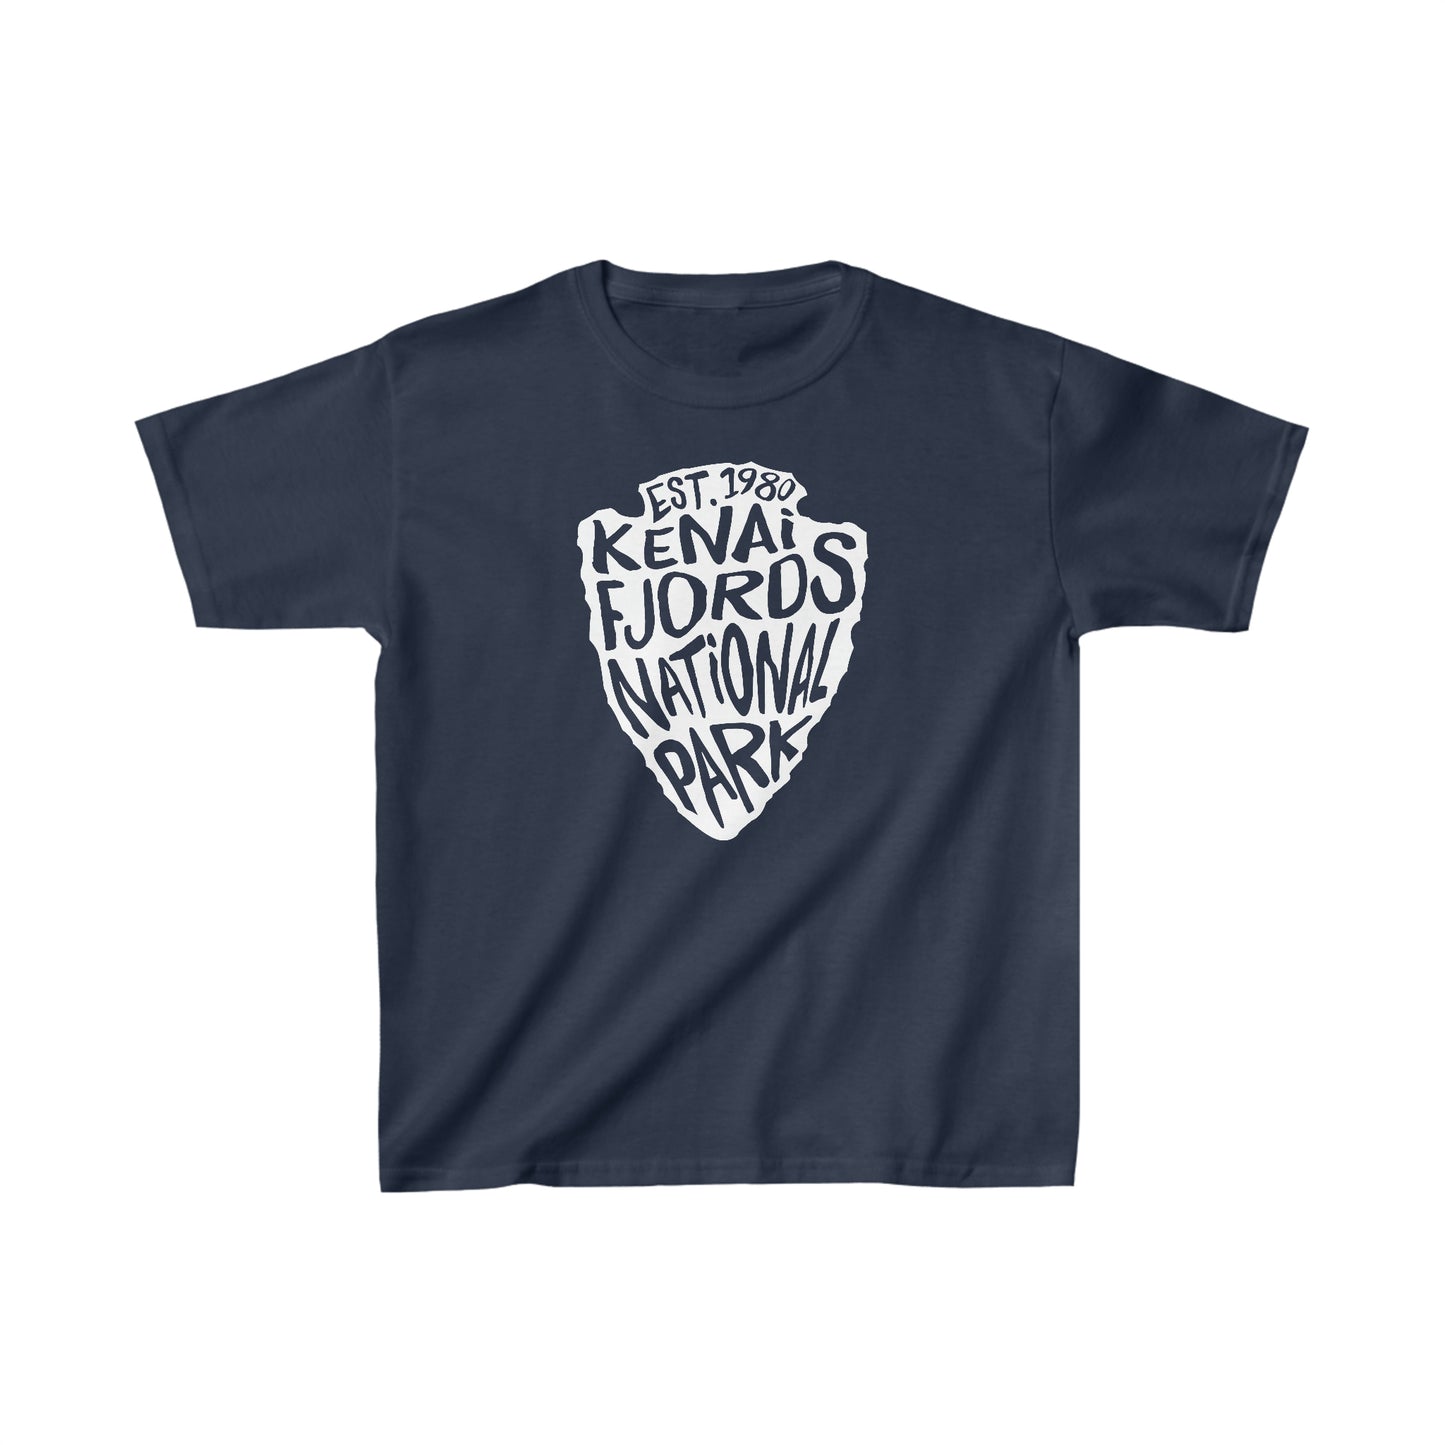 Kenai Fjords National Park Child T-Shirt - Arrowhead Design